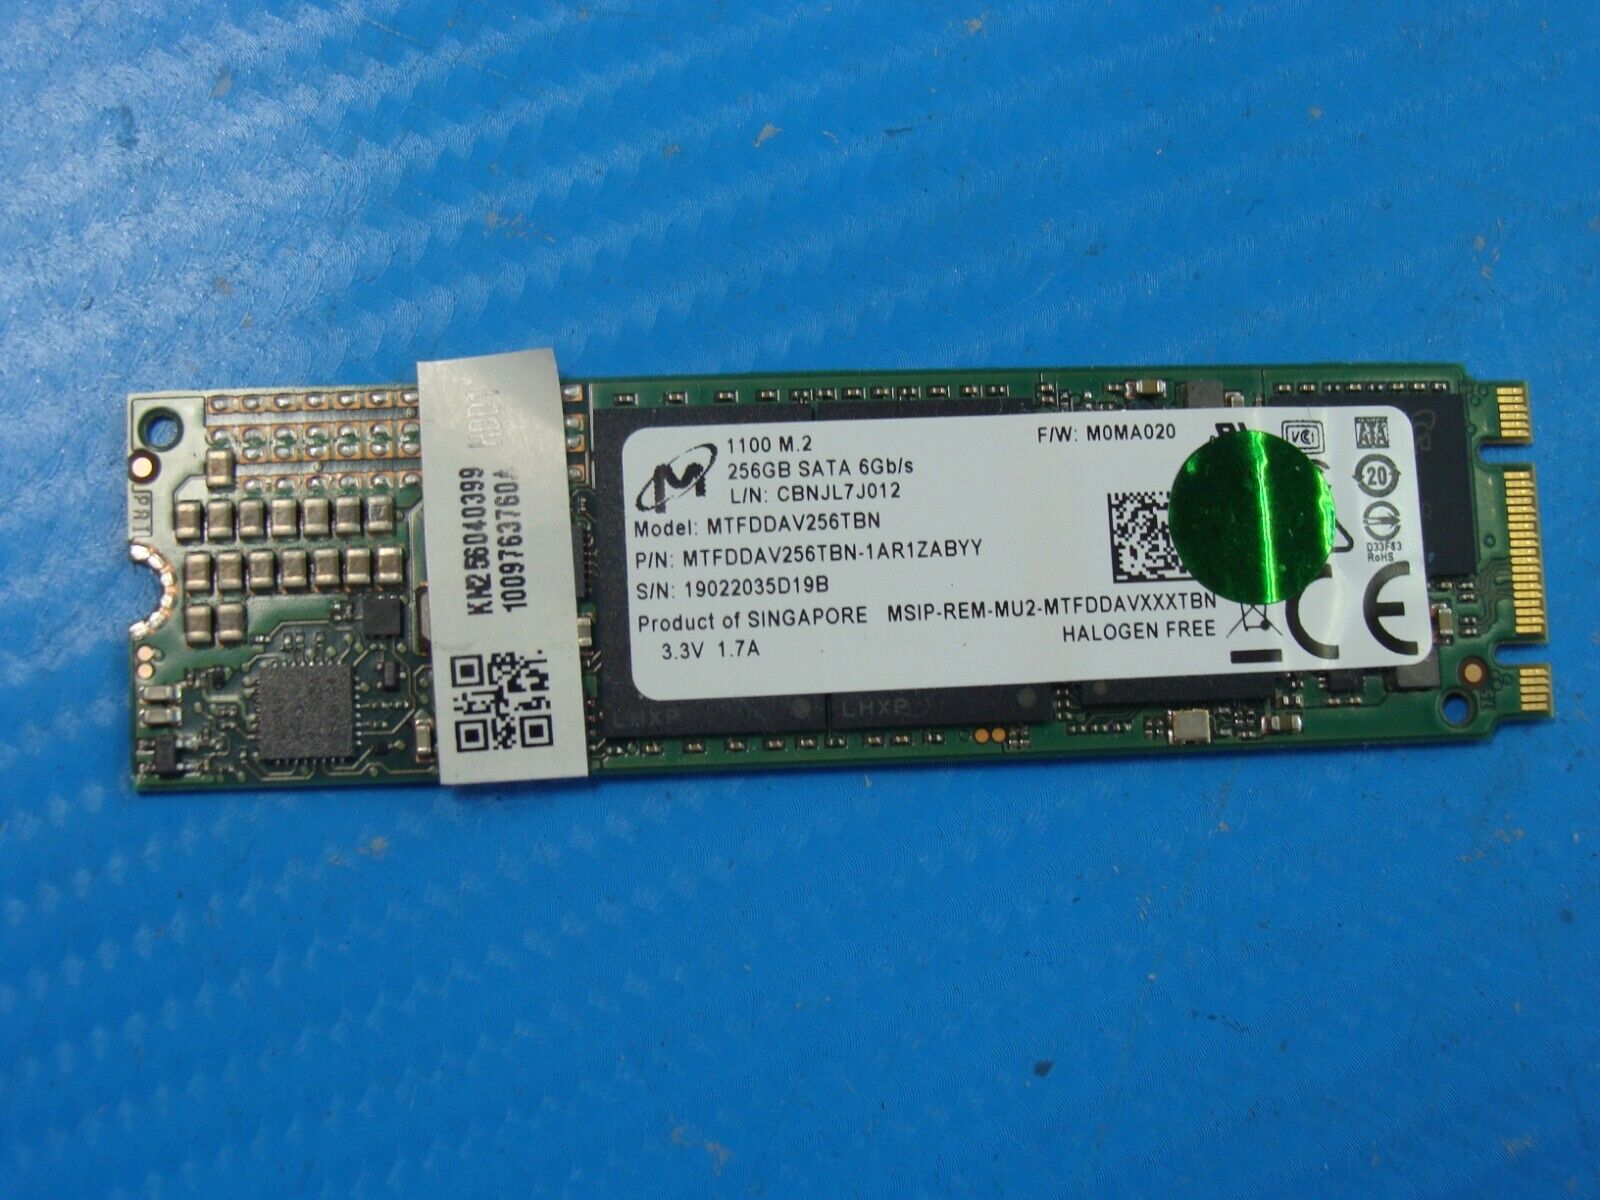 Acer E5-576G-5762 Micron 256GB SATA M.2 Solid State Drive MTFDDAV256TBN-1AR1ZABY